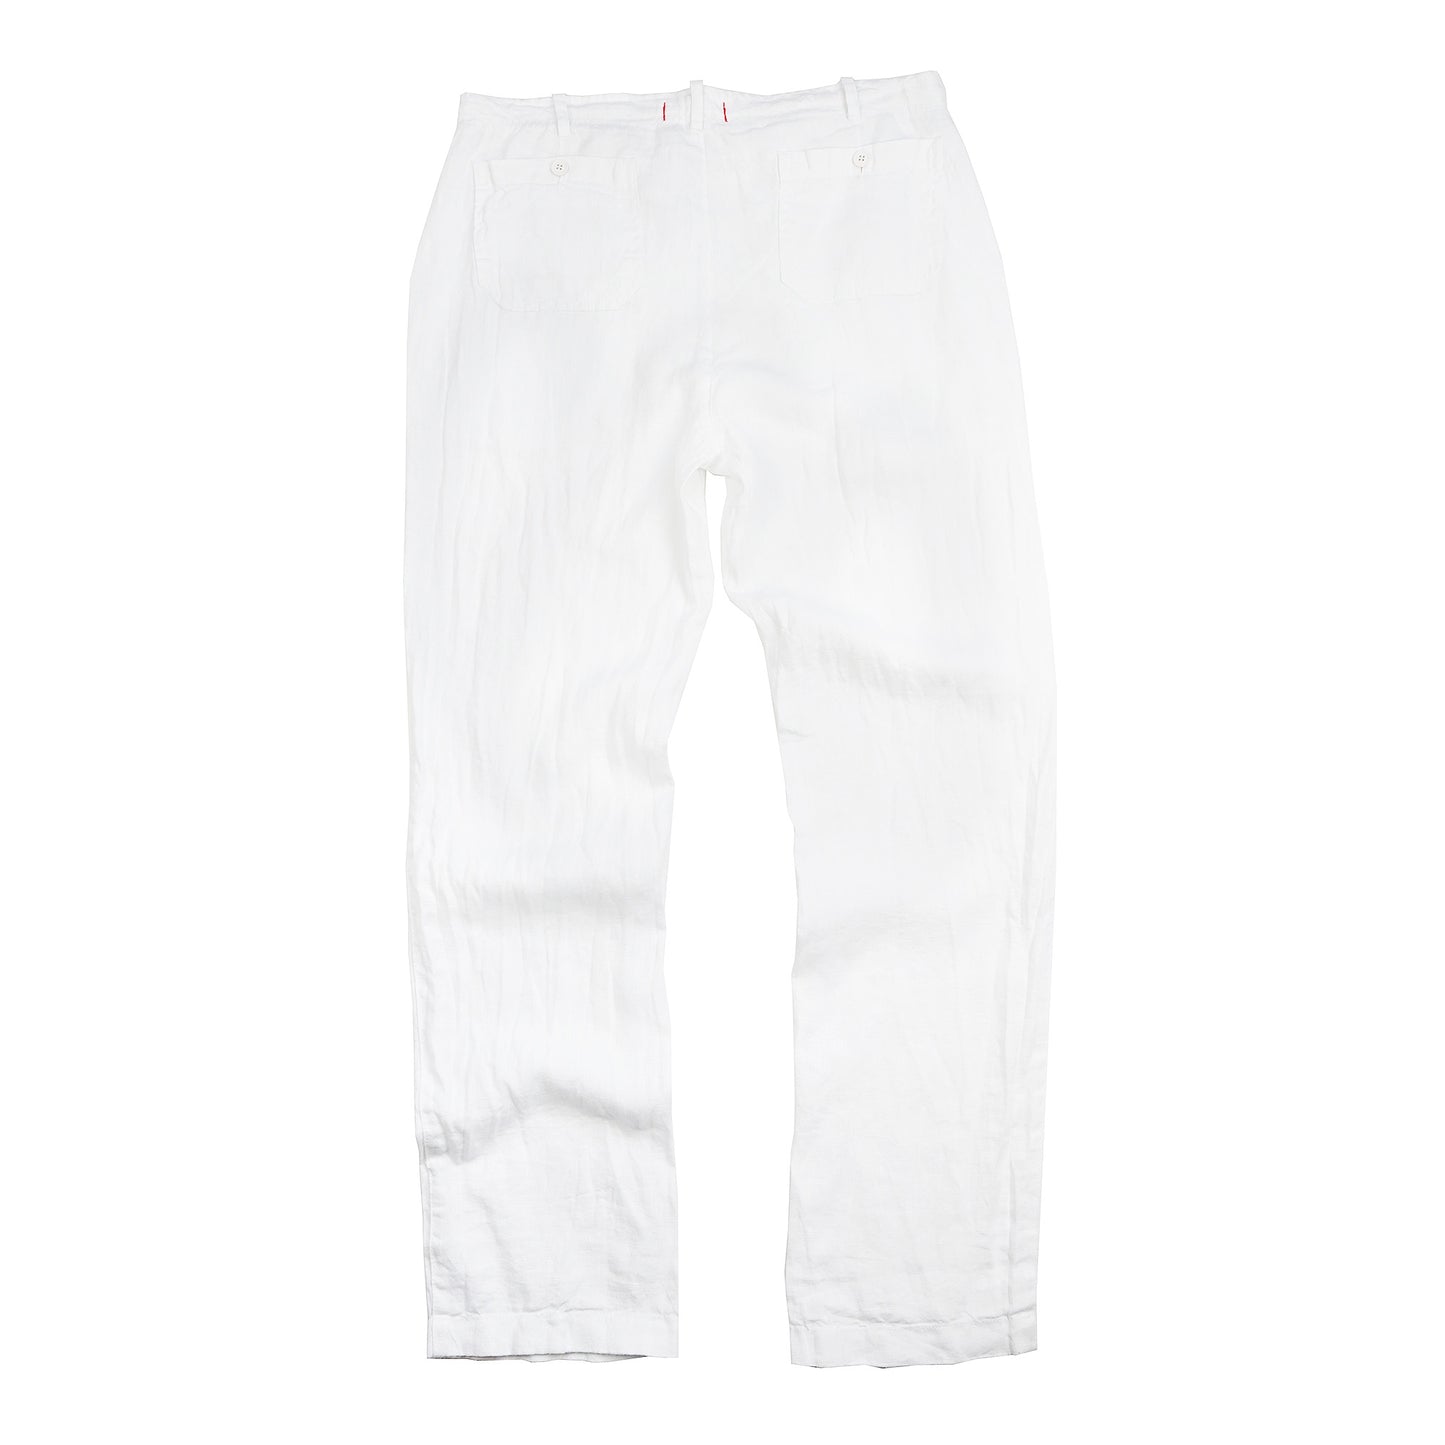 Key West White Linen Pants